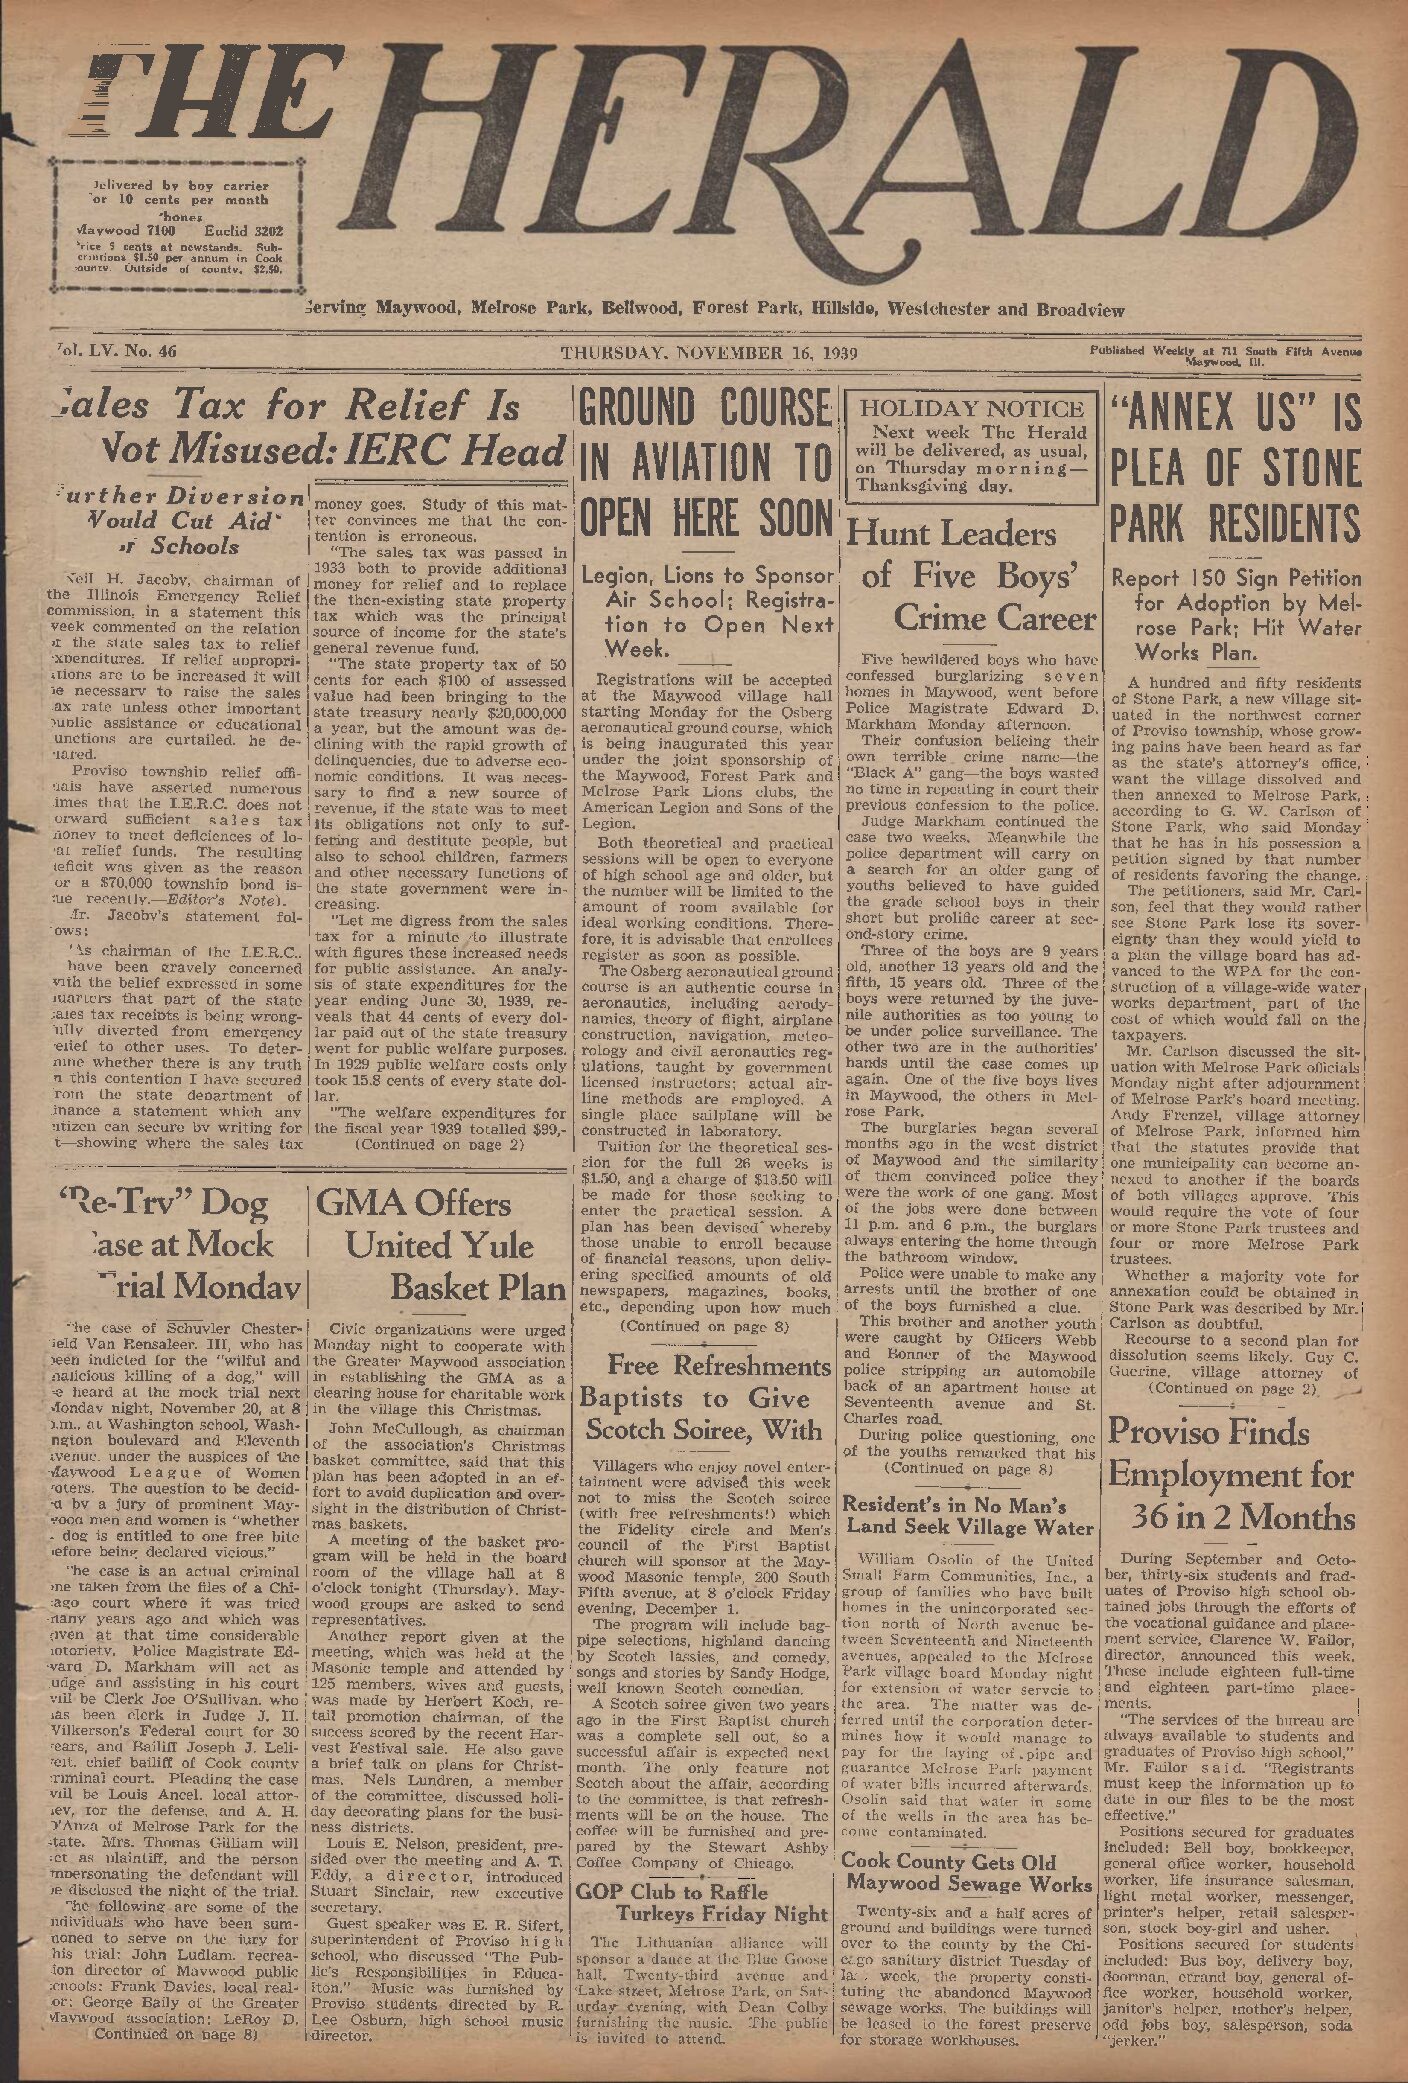 The Herald – 19391116